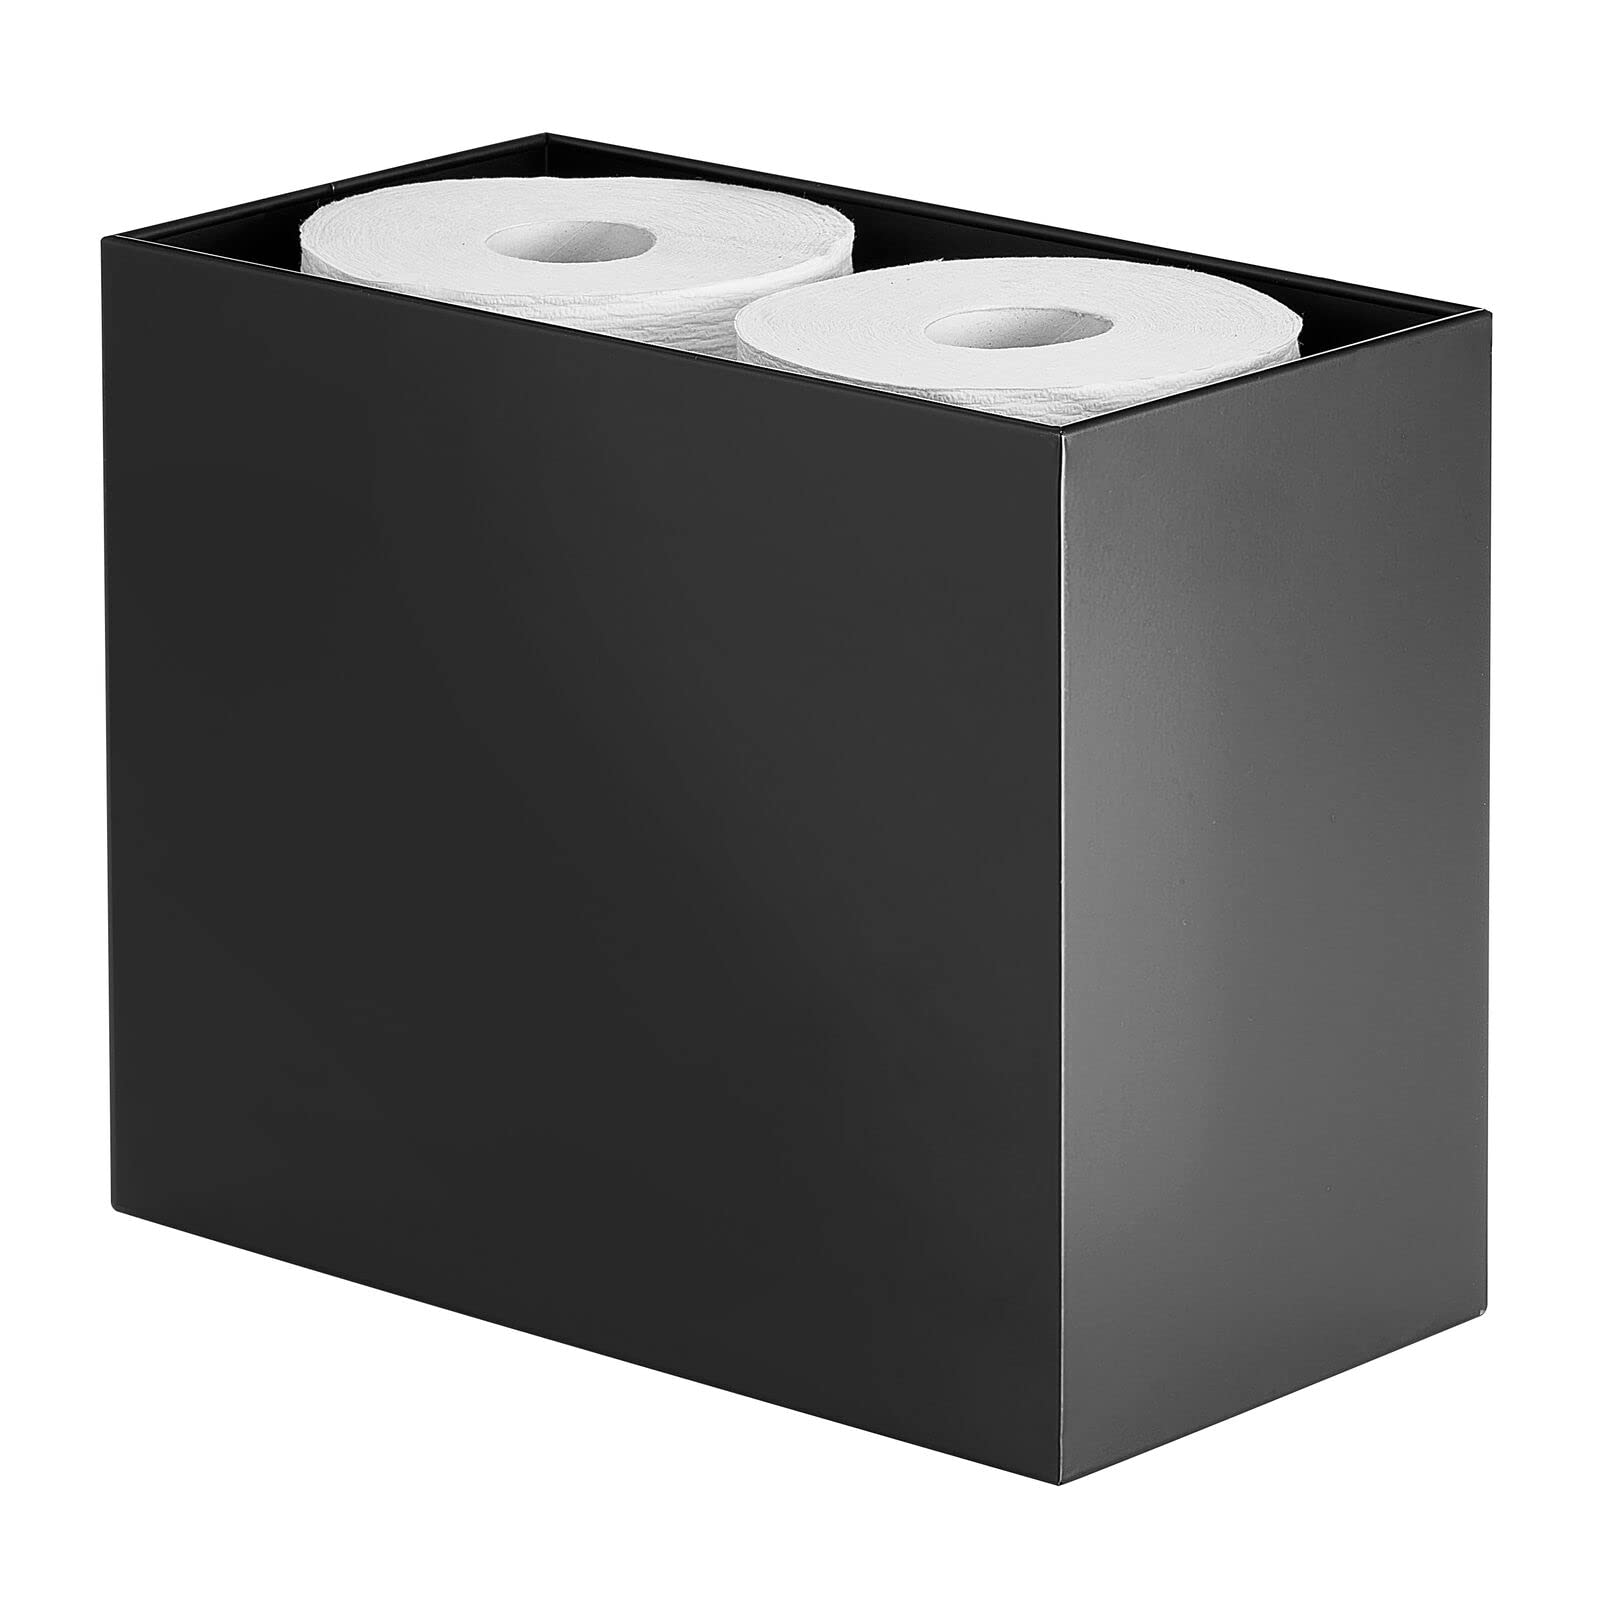 mDesign Metal Free-Standing Toilet Paper Holder - White